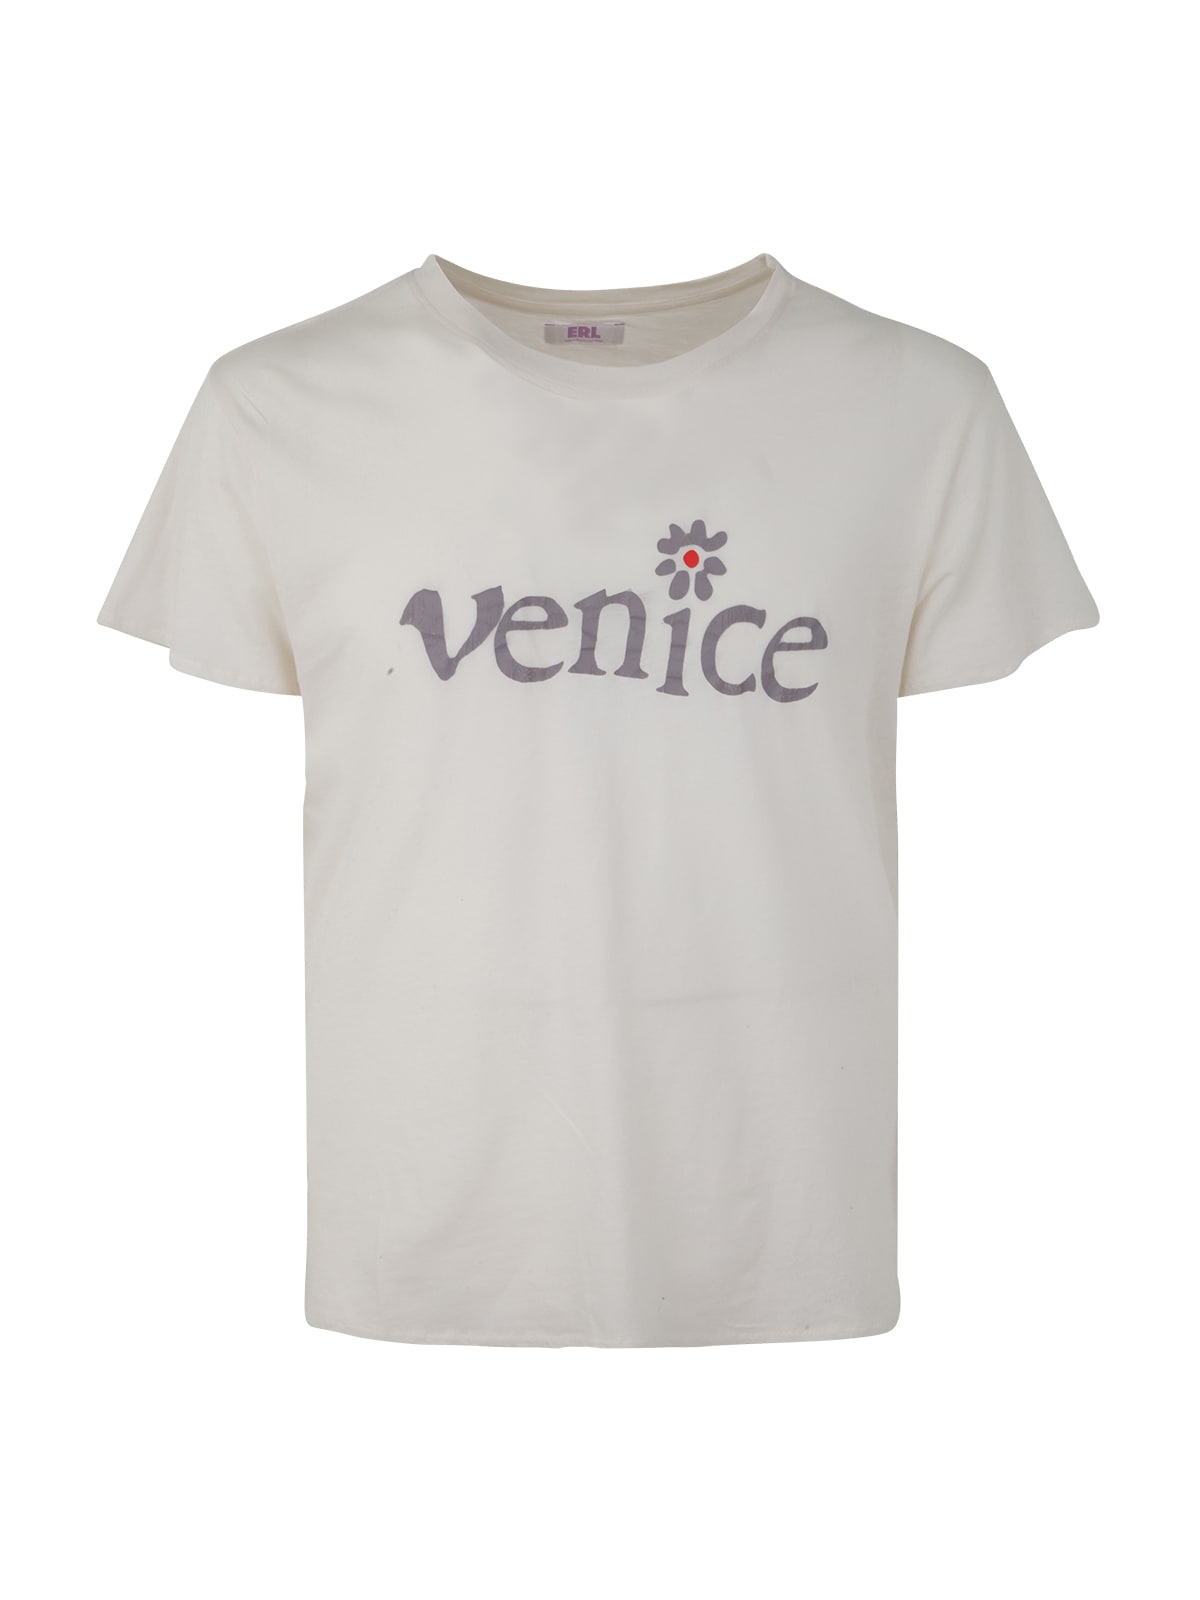 Unisex Venice Tshirt Knit